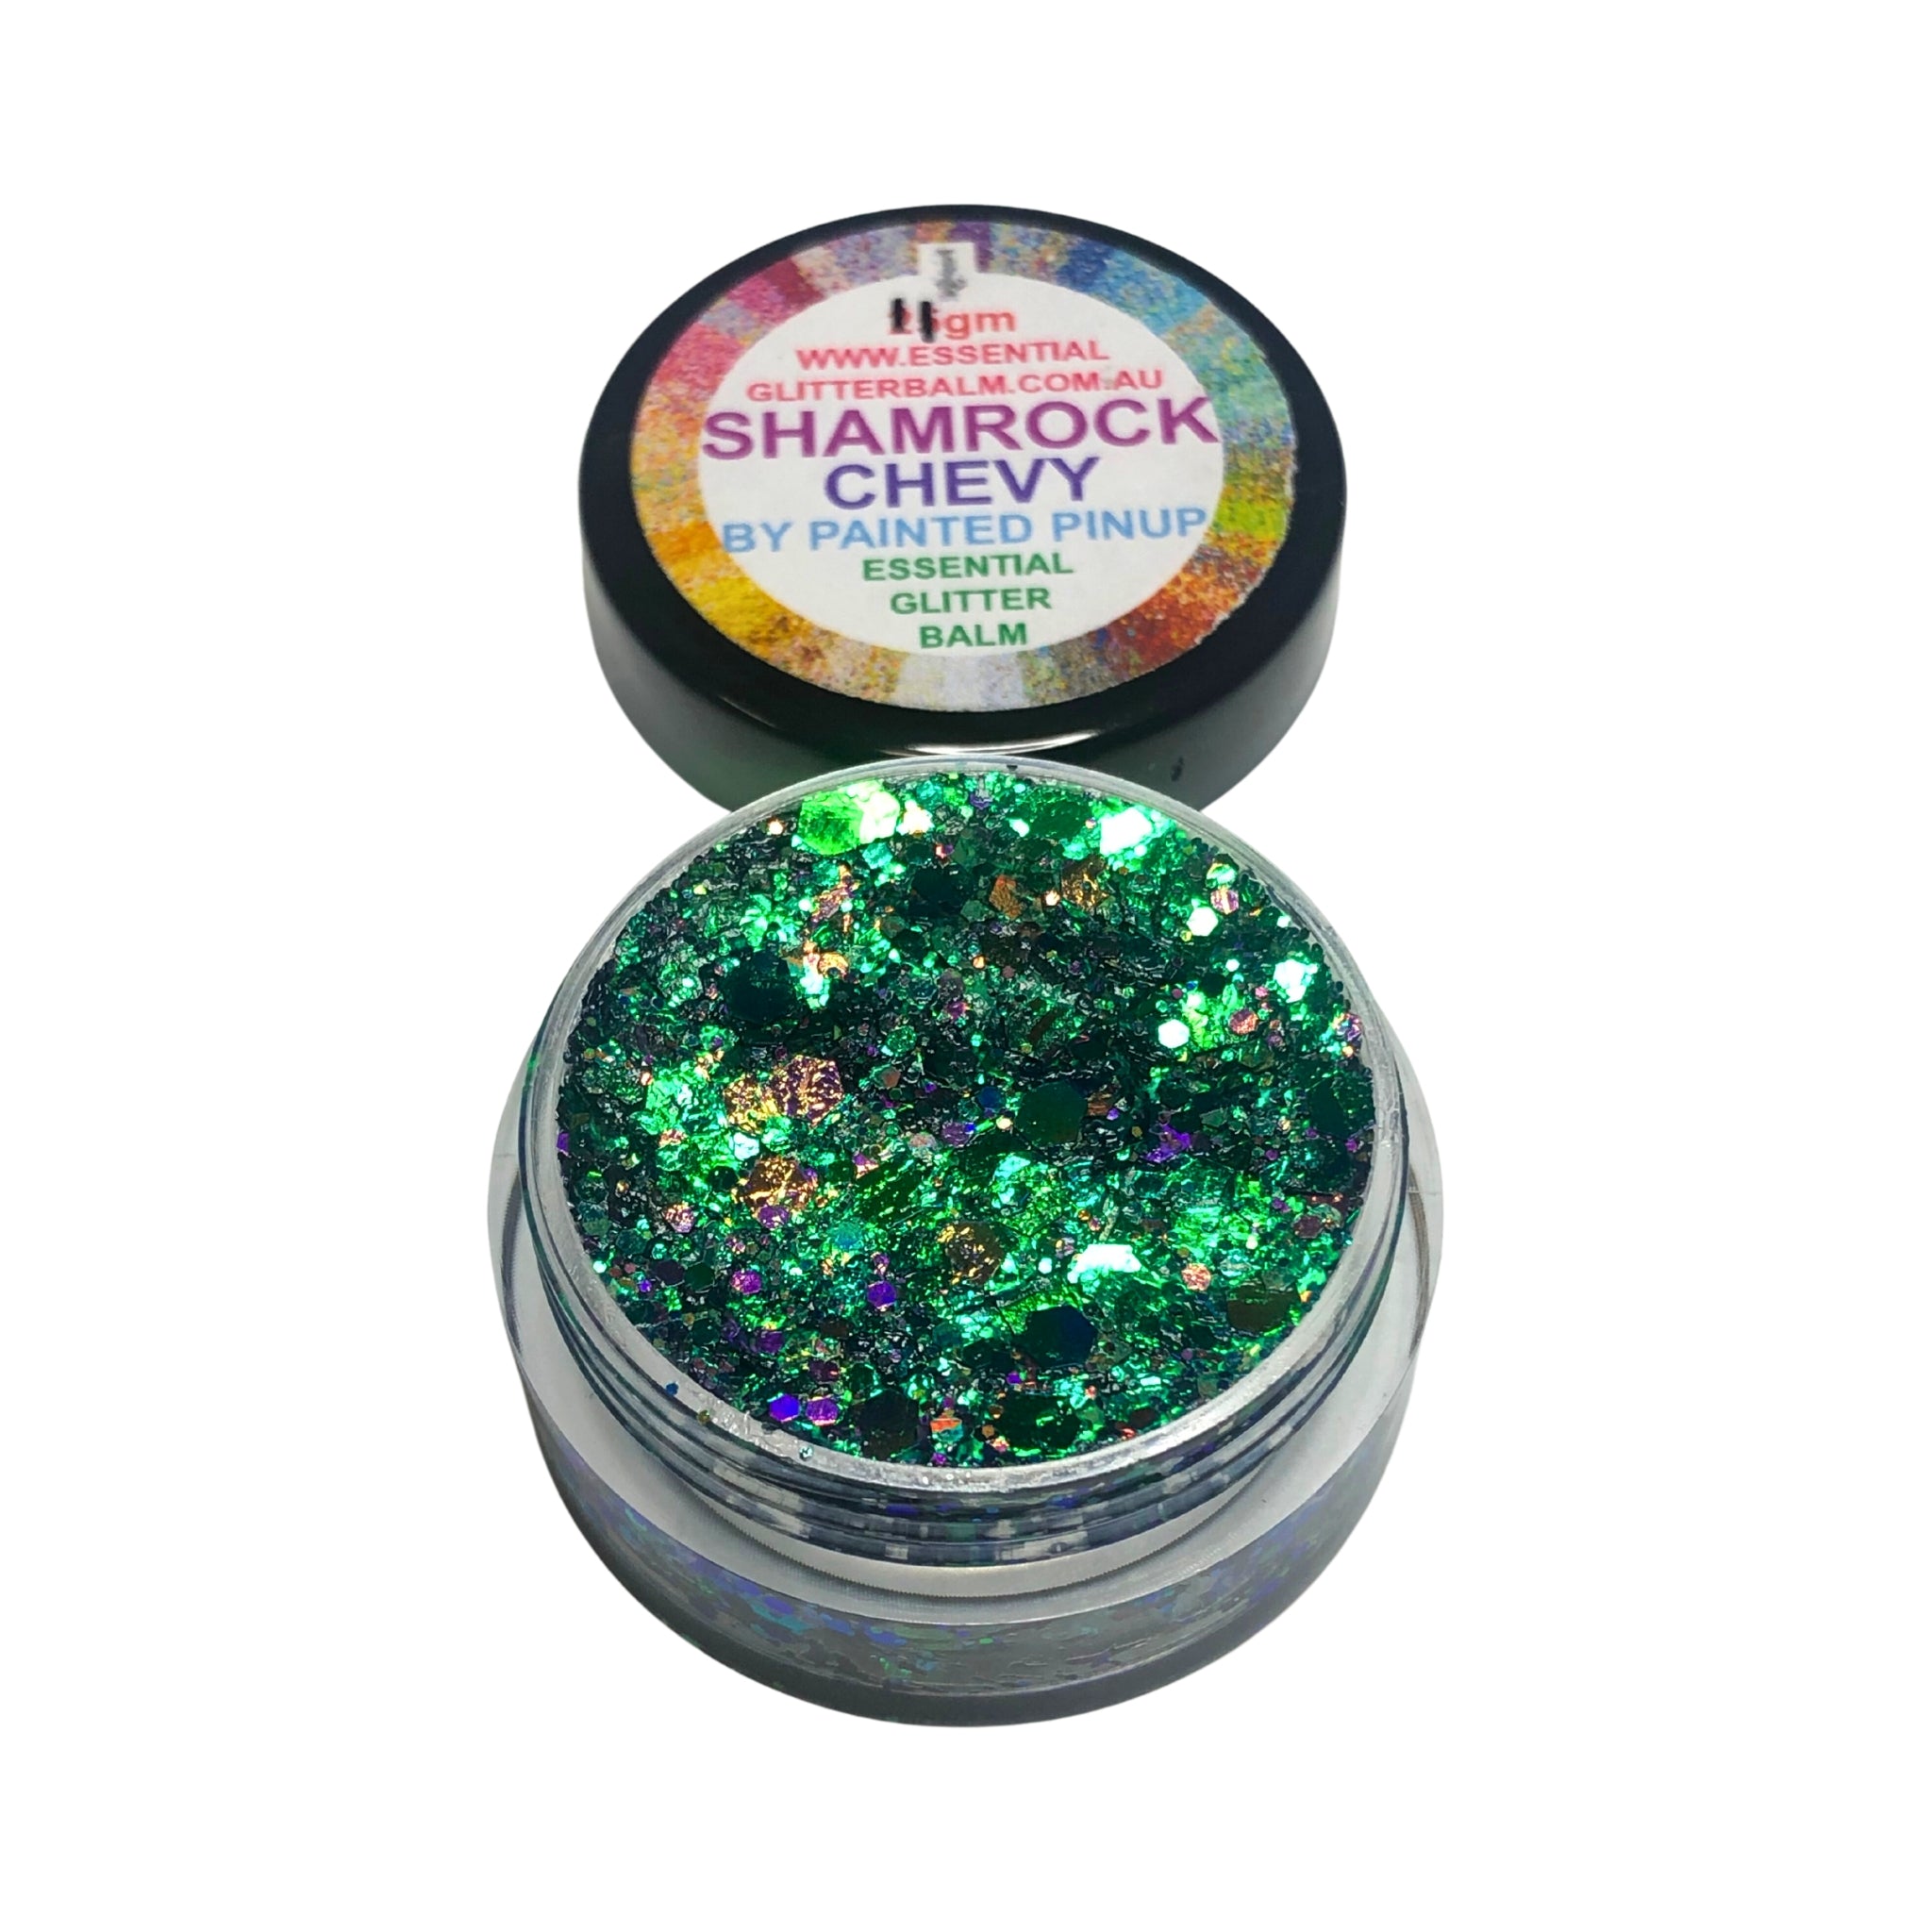 Essential Glitter Balm - SHAMROCK CHEVY